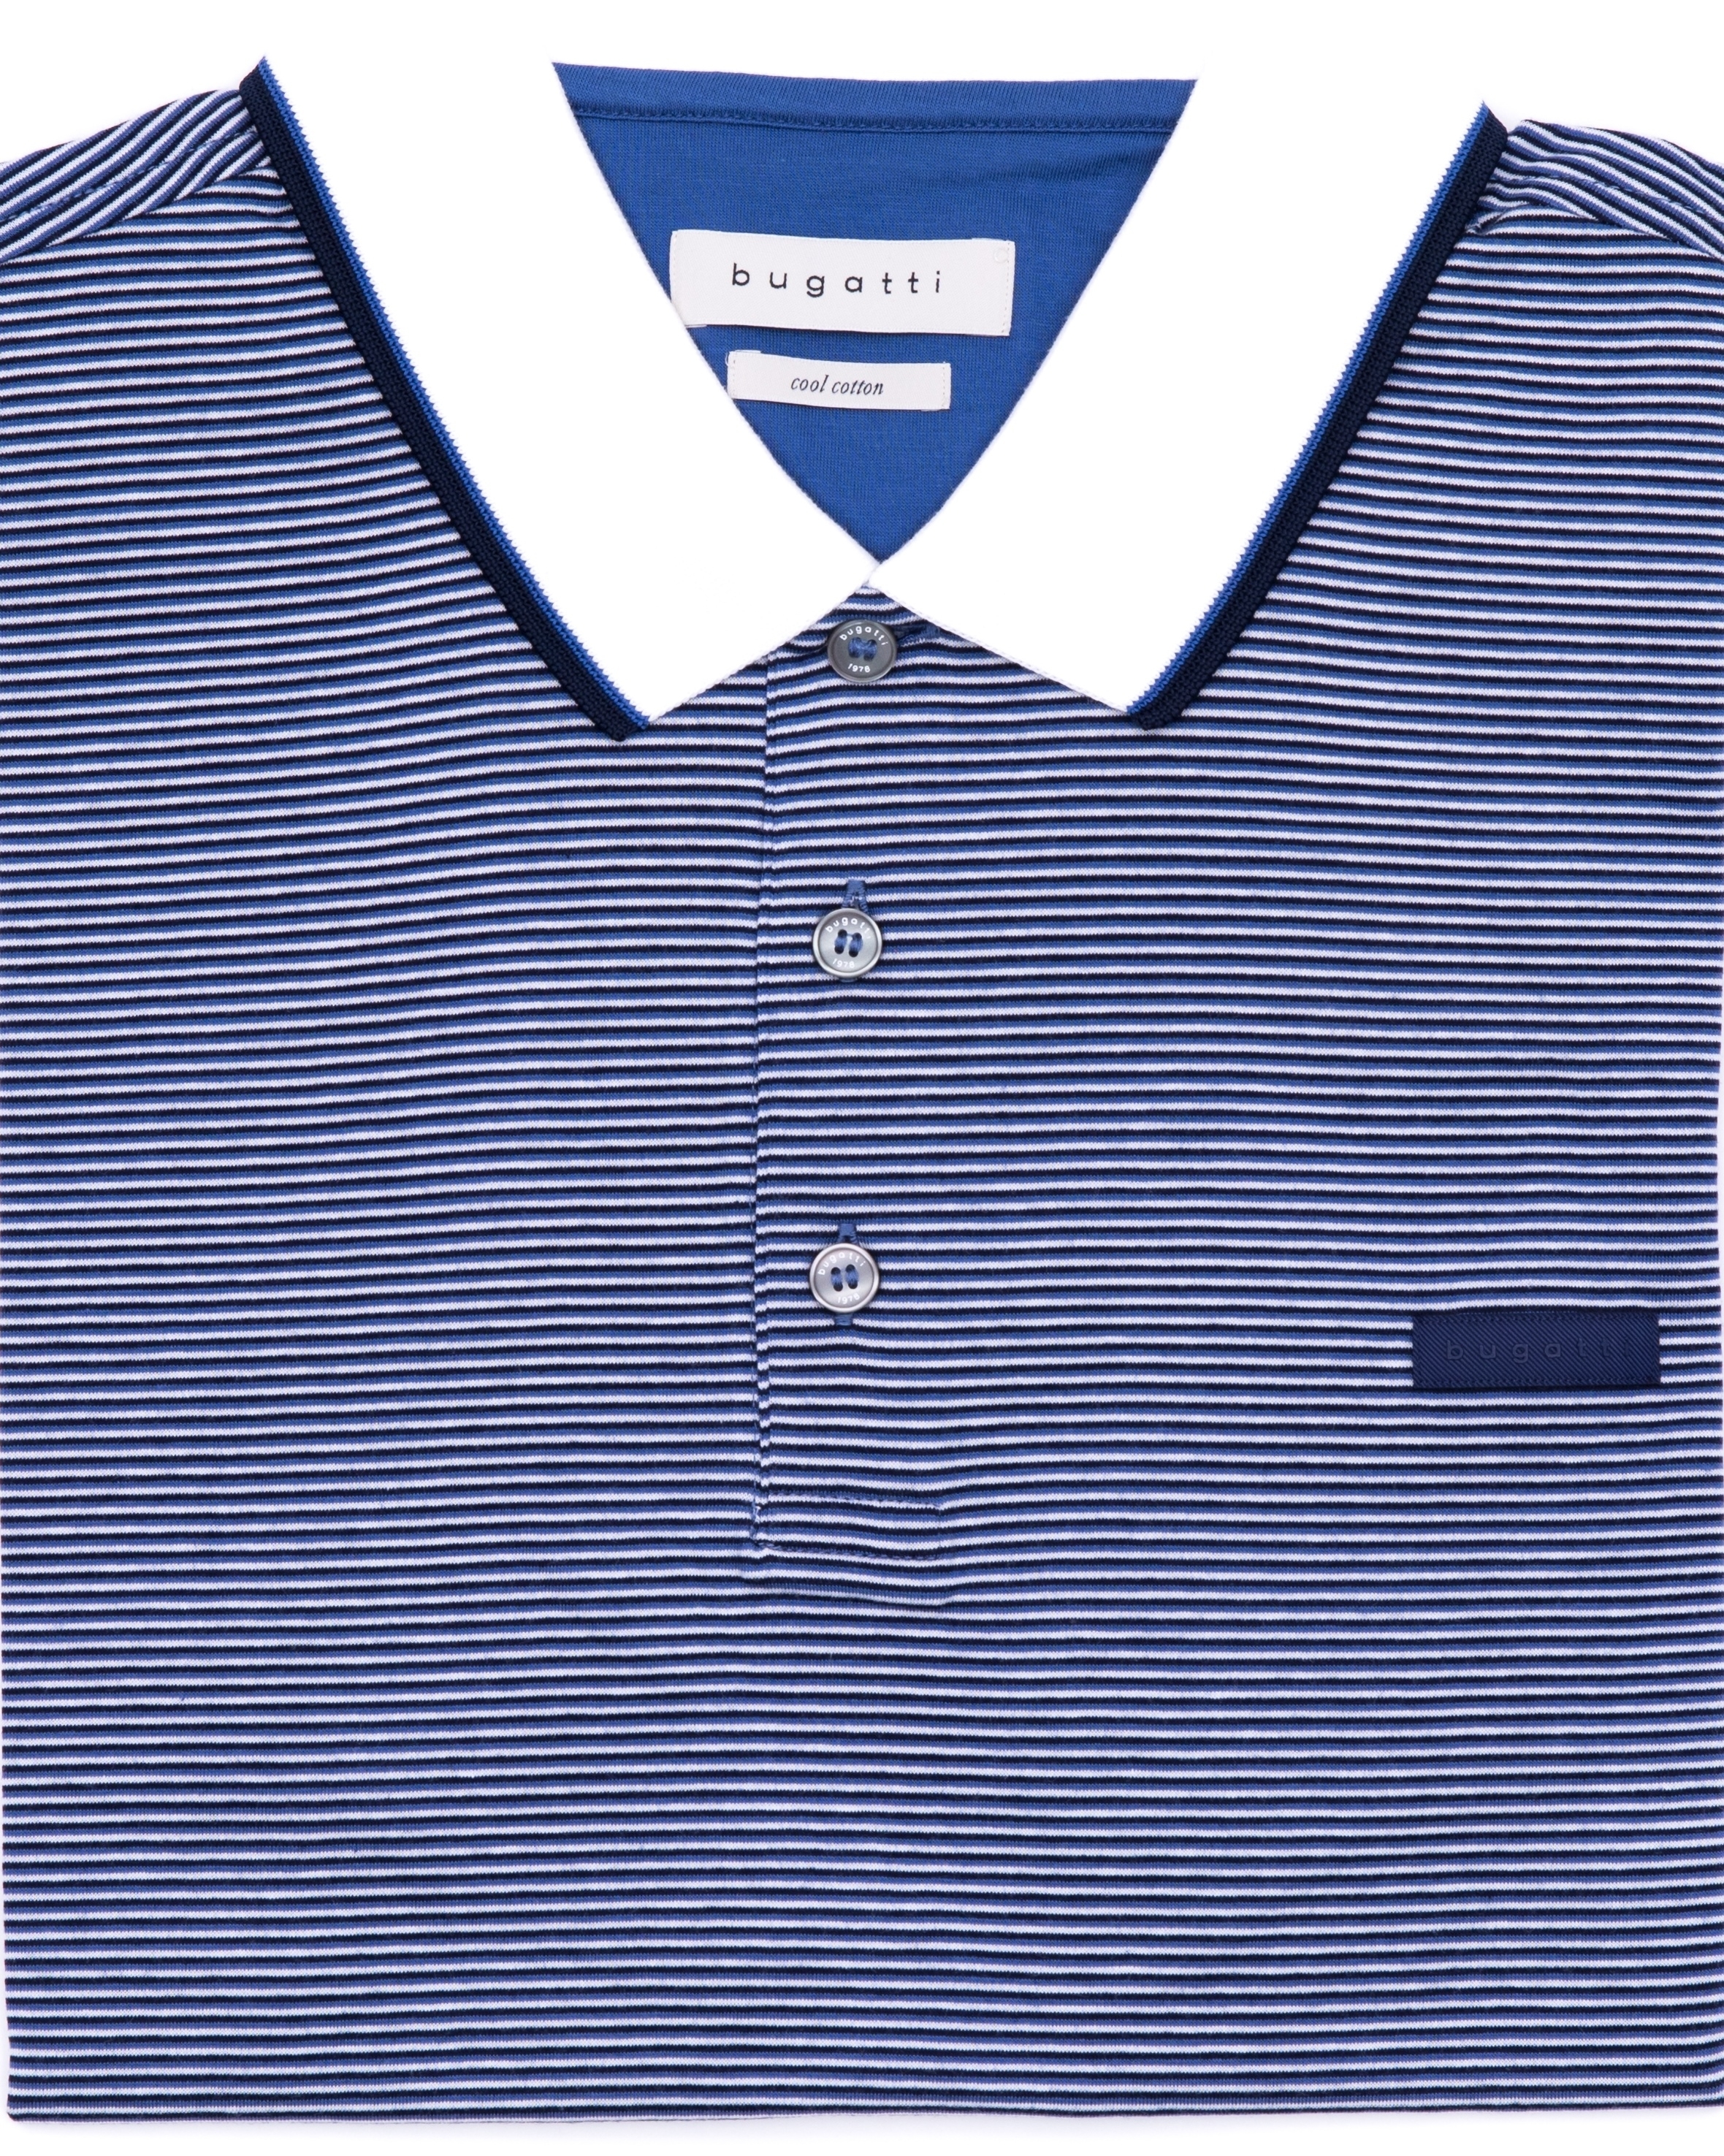 BUGATTI POLO SHIRT - CLEARANCE SALE : Digby\'s Menswear | Mens Clothing  Online - BUGATTI SUMMER 19